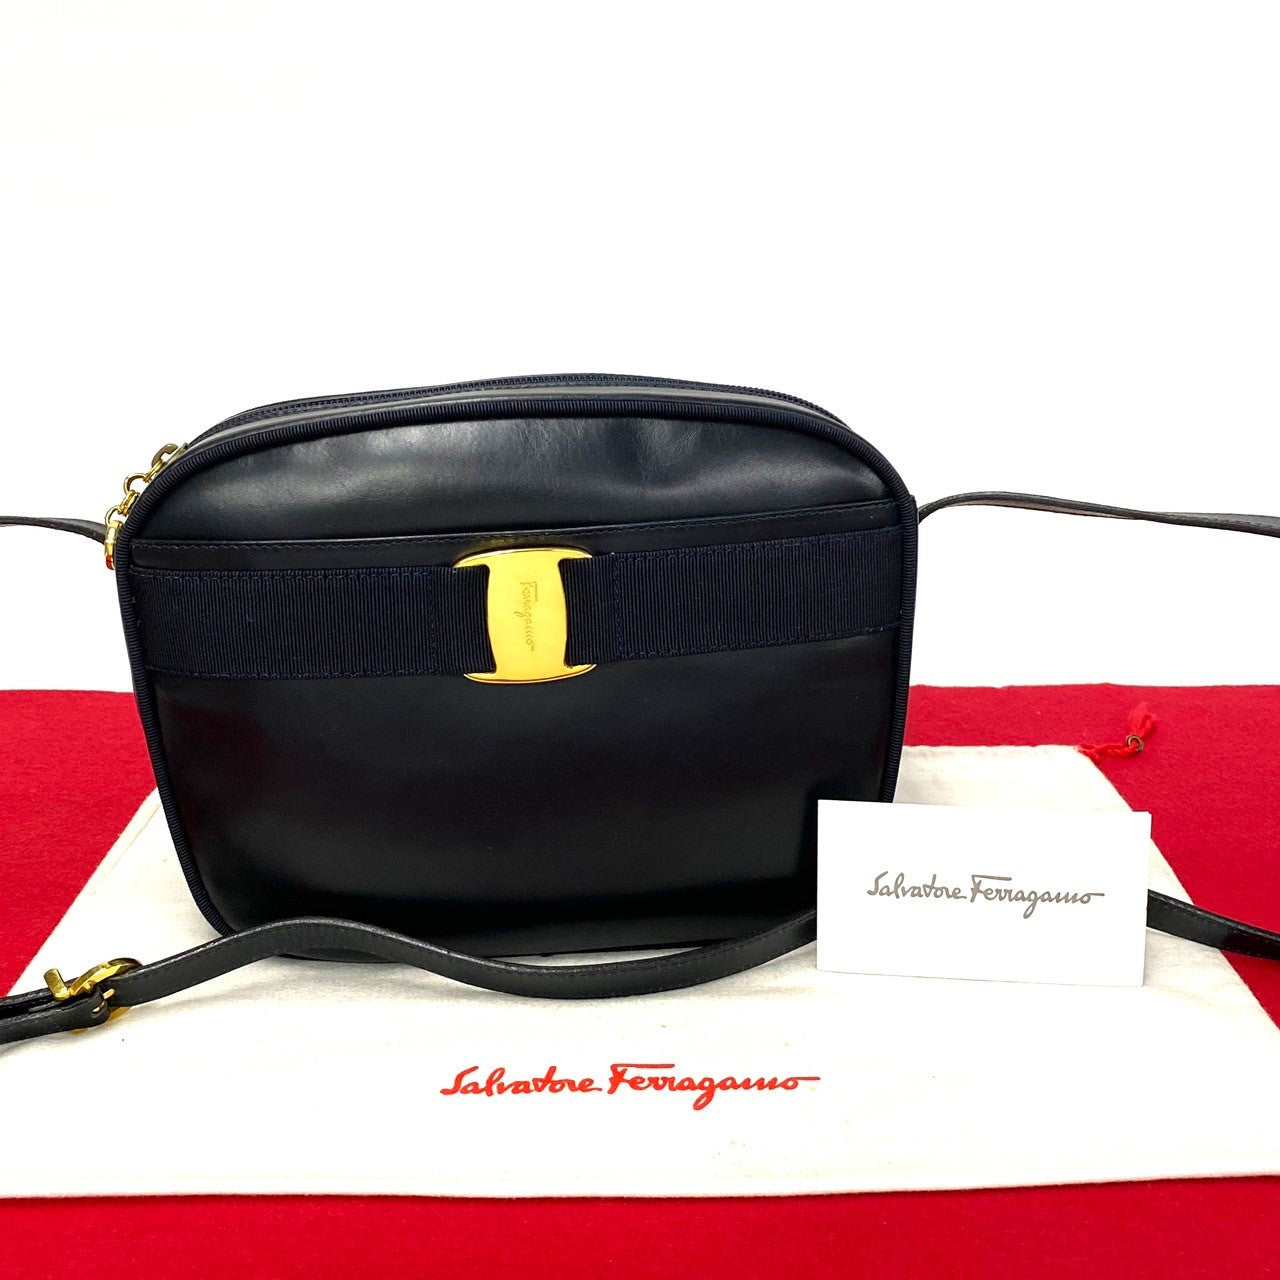 Salvatore Ferragamo Leather Vara Bow Crossbody Bag Leather Crossbody Bag A-21 4183 in Good condition